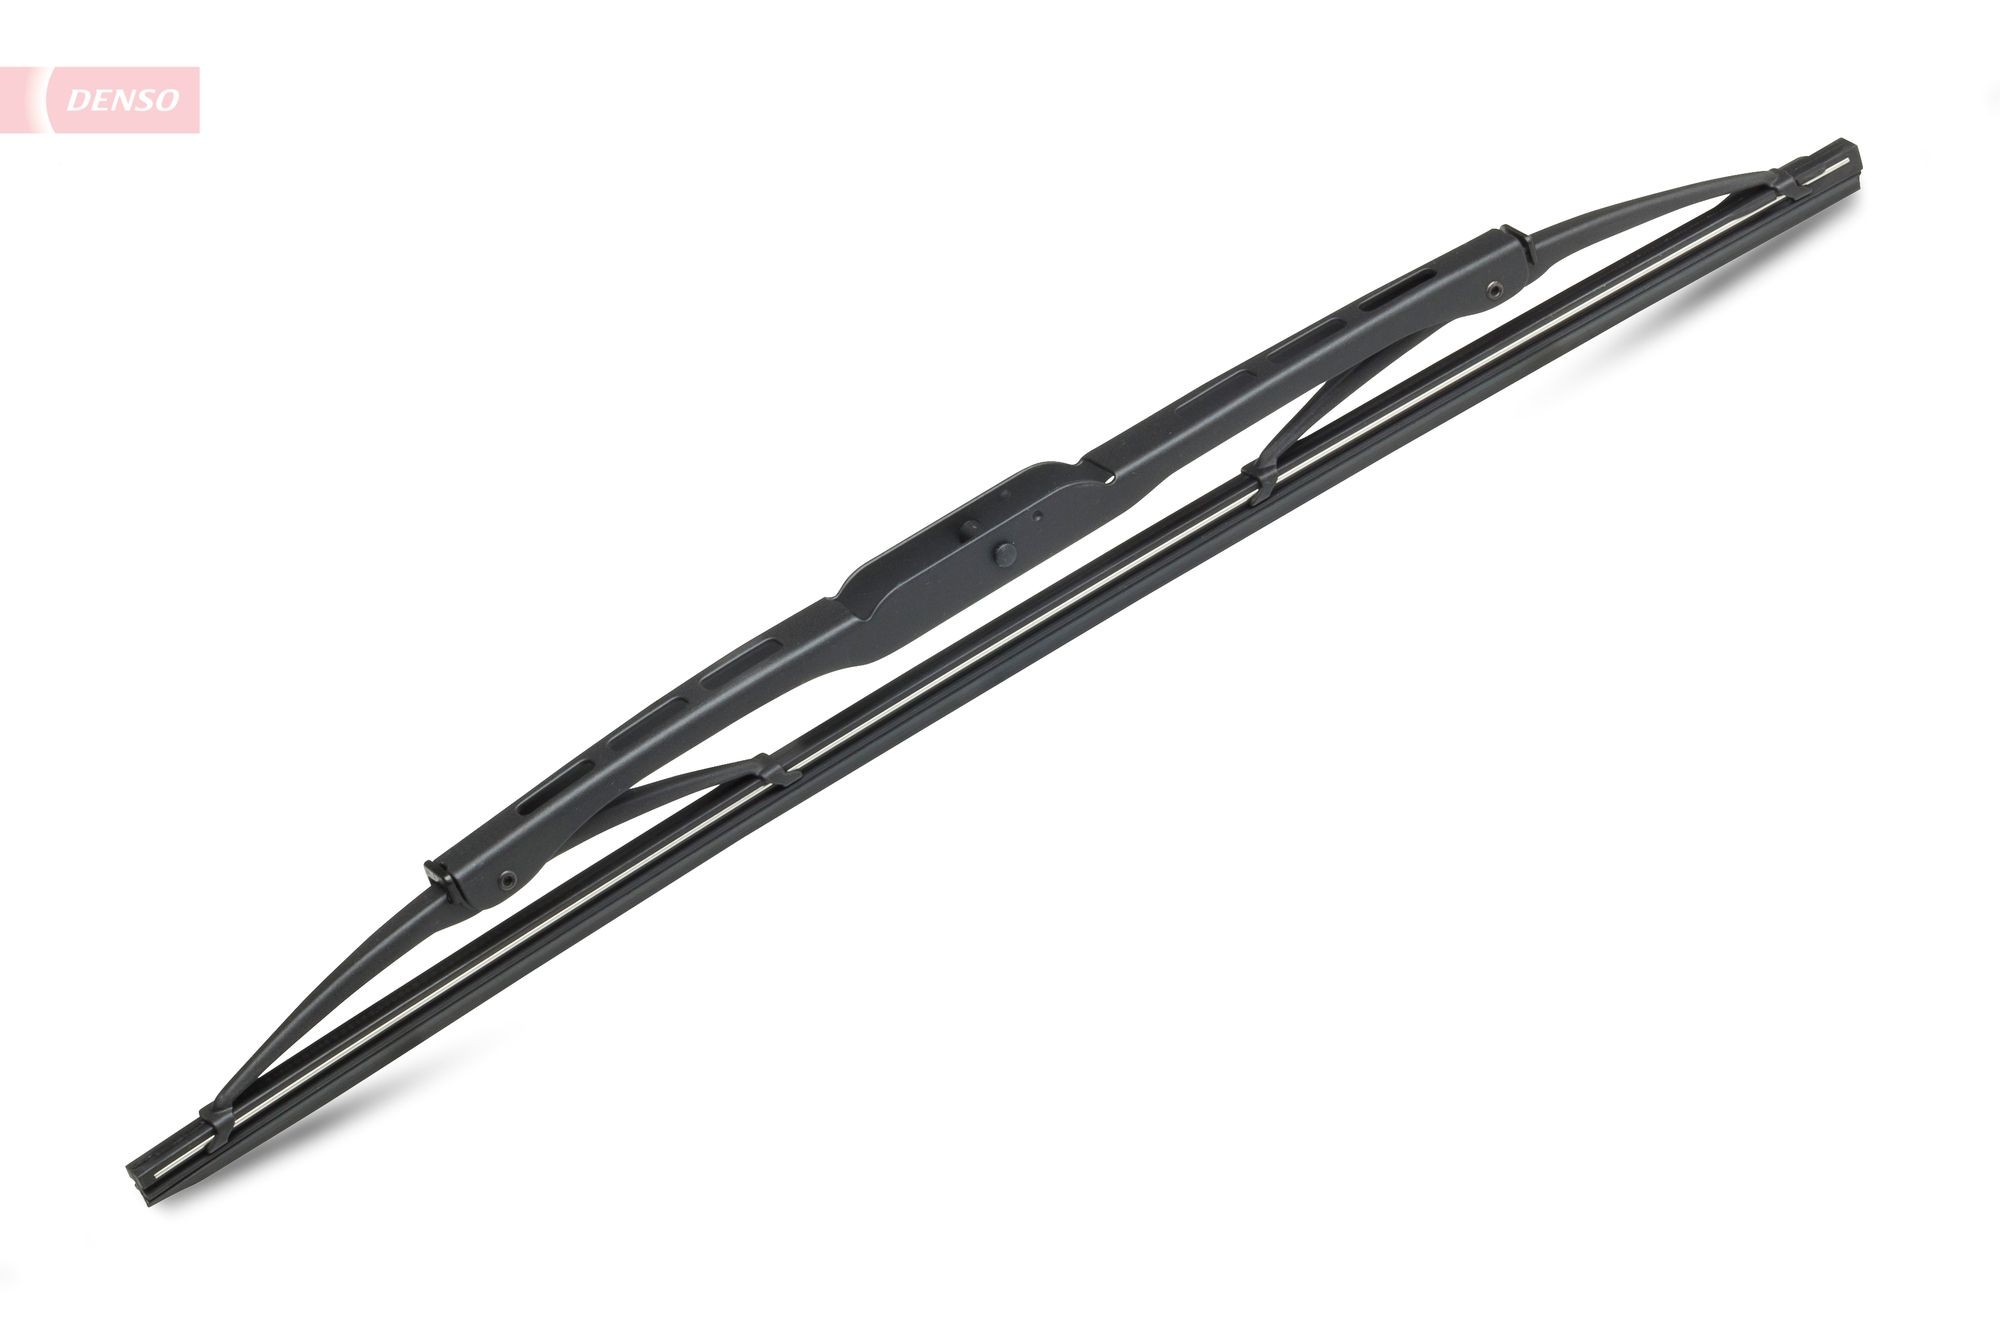 DENSO Standard DM-038 Rear wiper blade